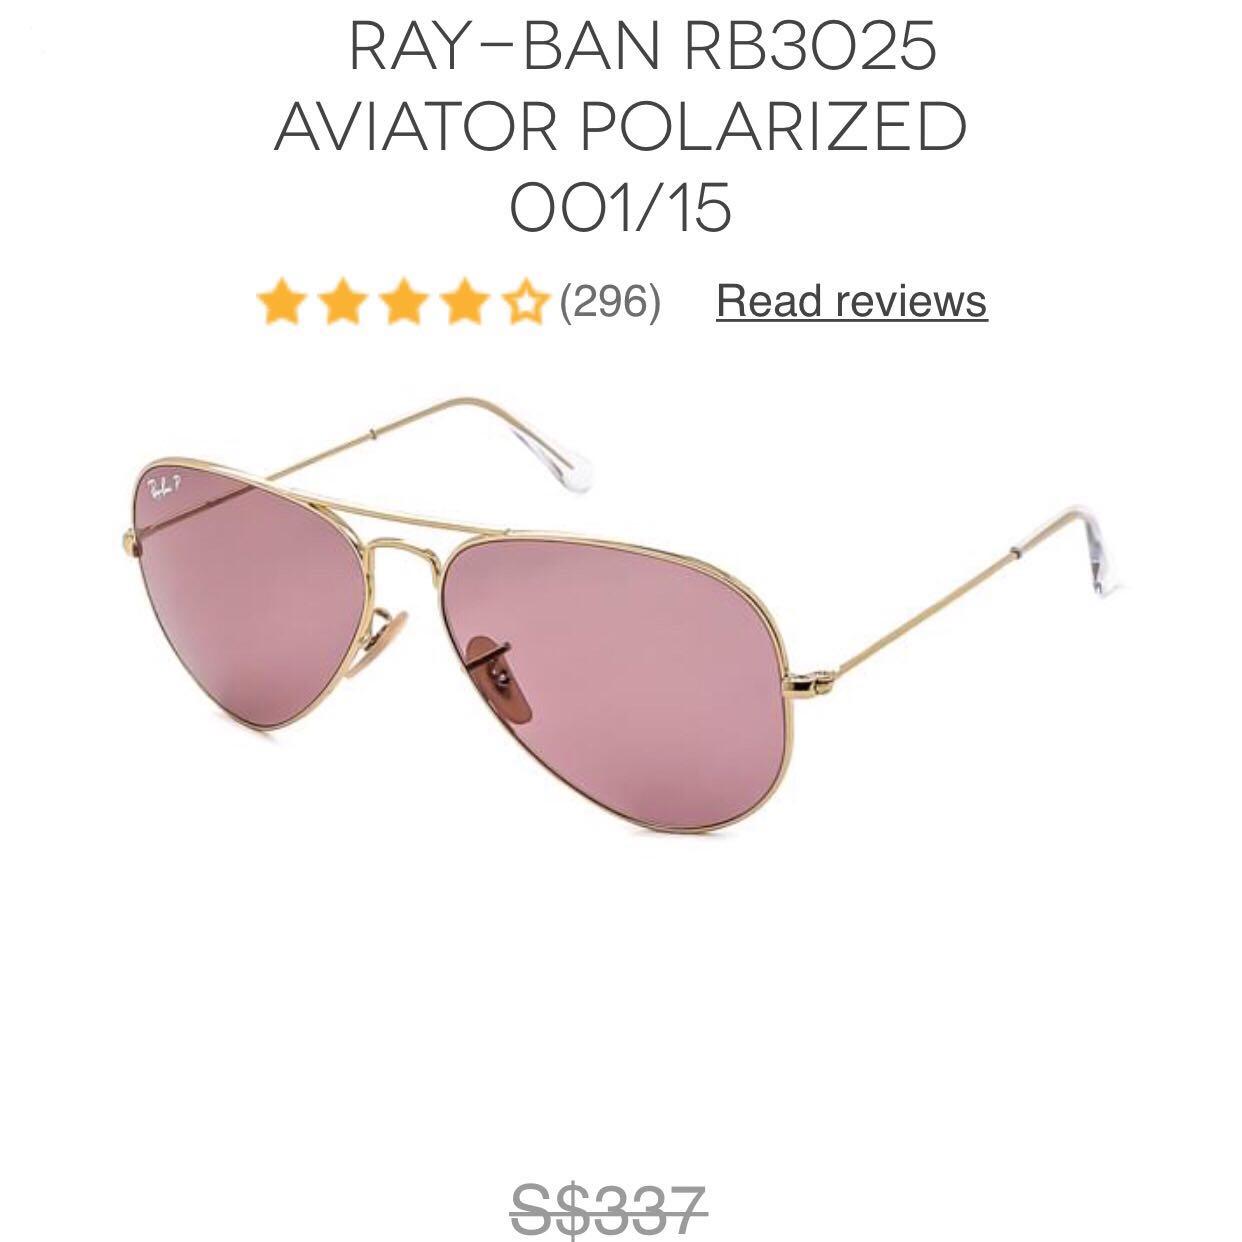 Ray Ban Polarised Aviator Sunglasses Crystal Pink Women S Fashion Accessories Eyewear Sunglasses On Carousell